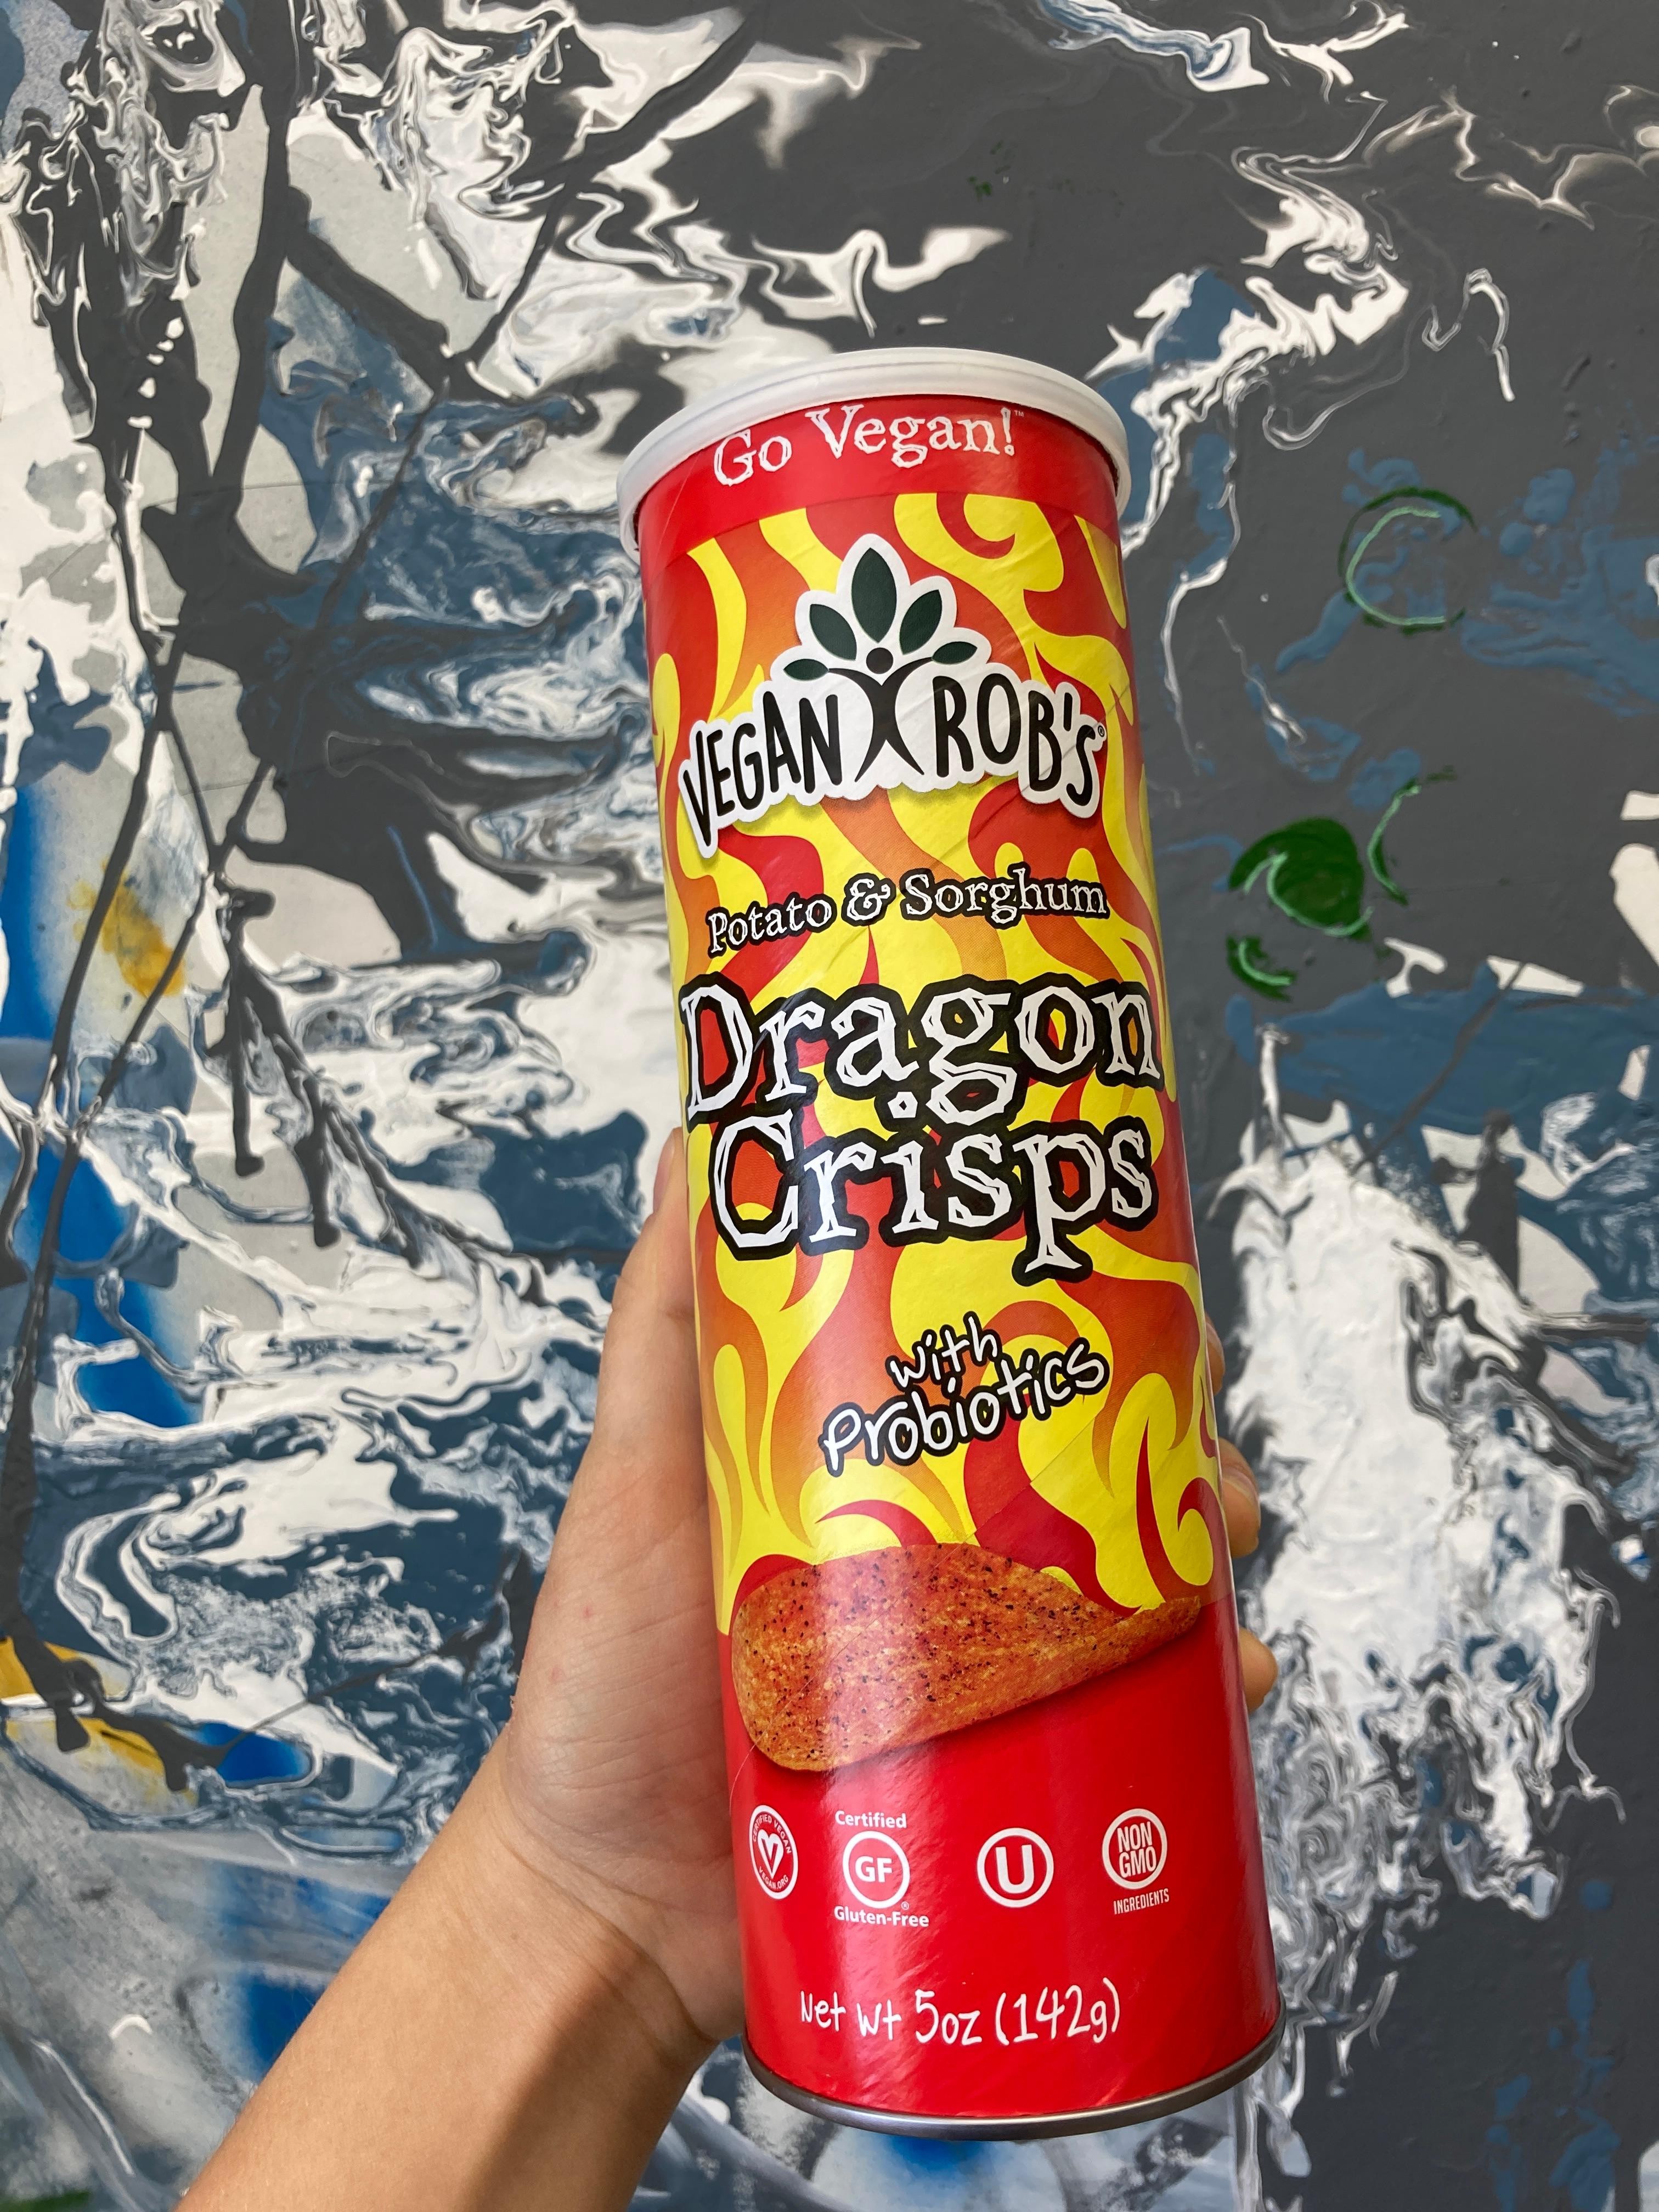 Vegan Robs Dragon Crisps 5 oz "Pringles" Can